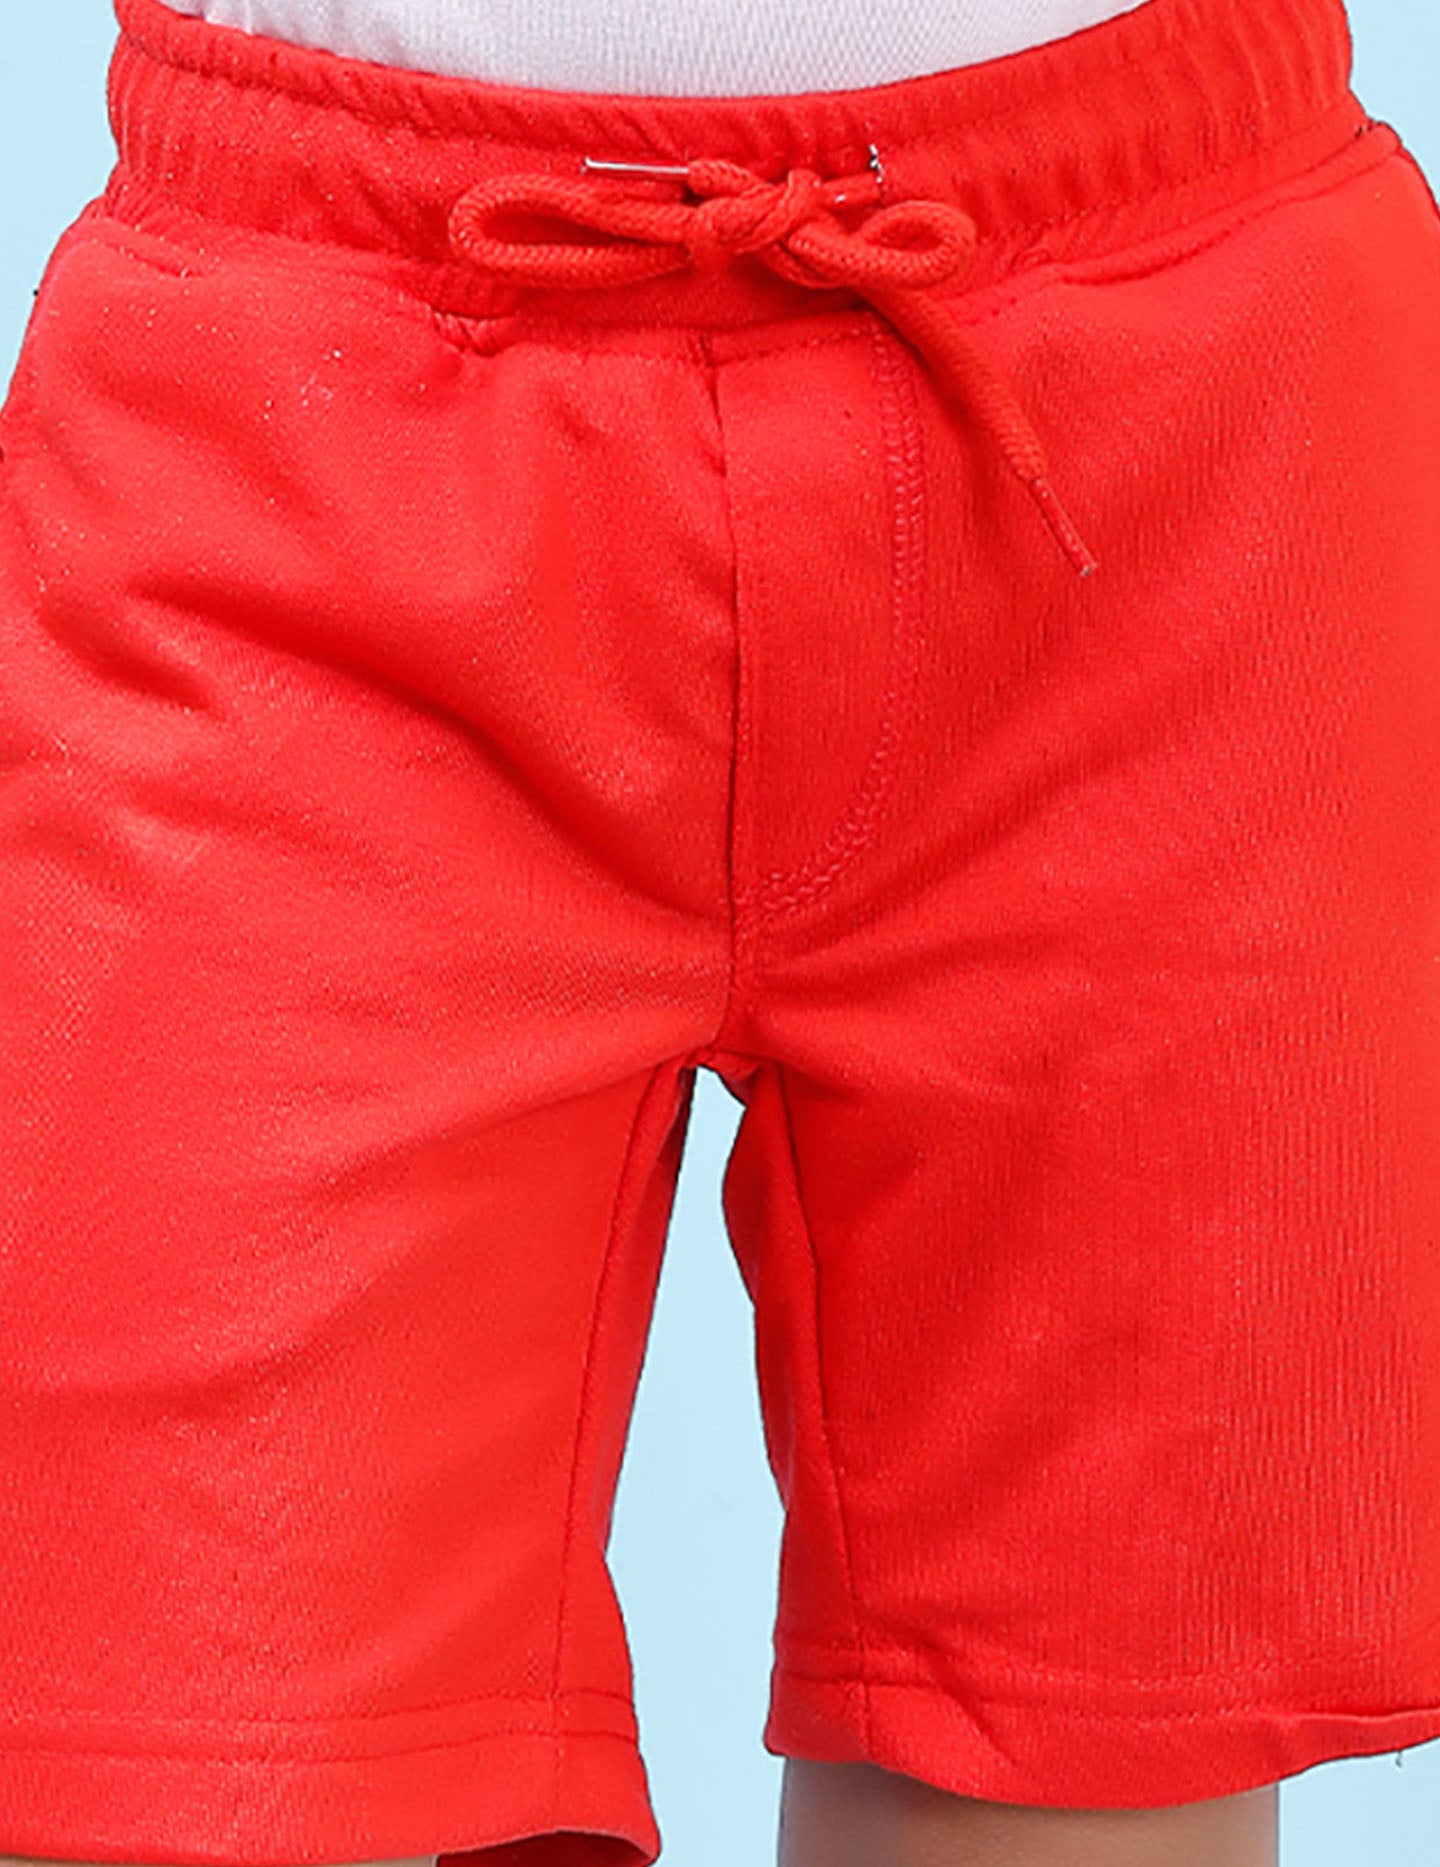 Nusyl Arrow Printed Red Boys Shorts